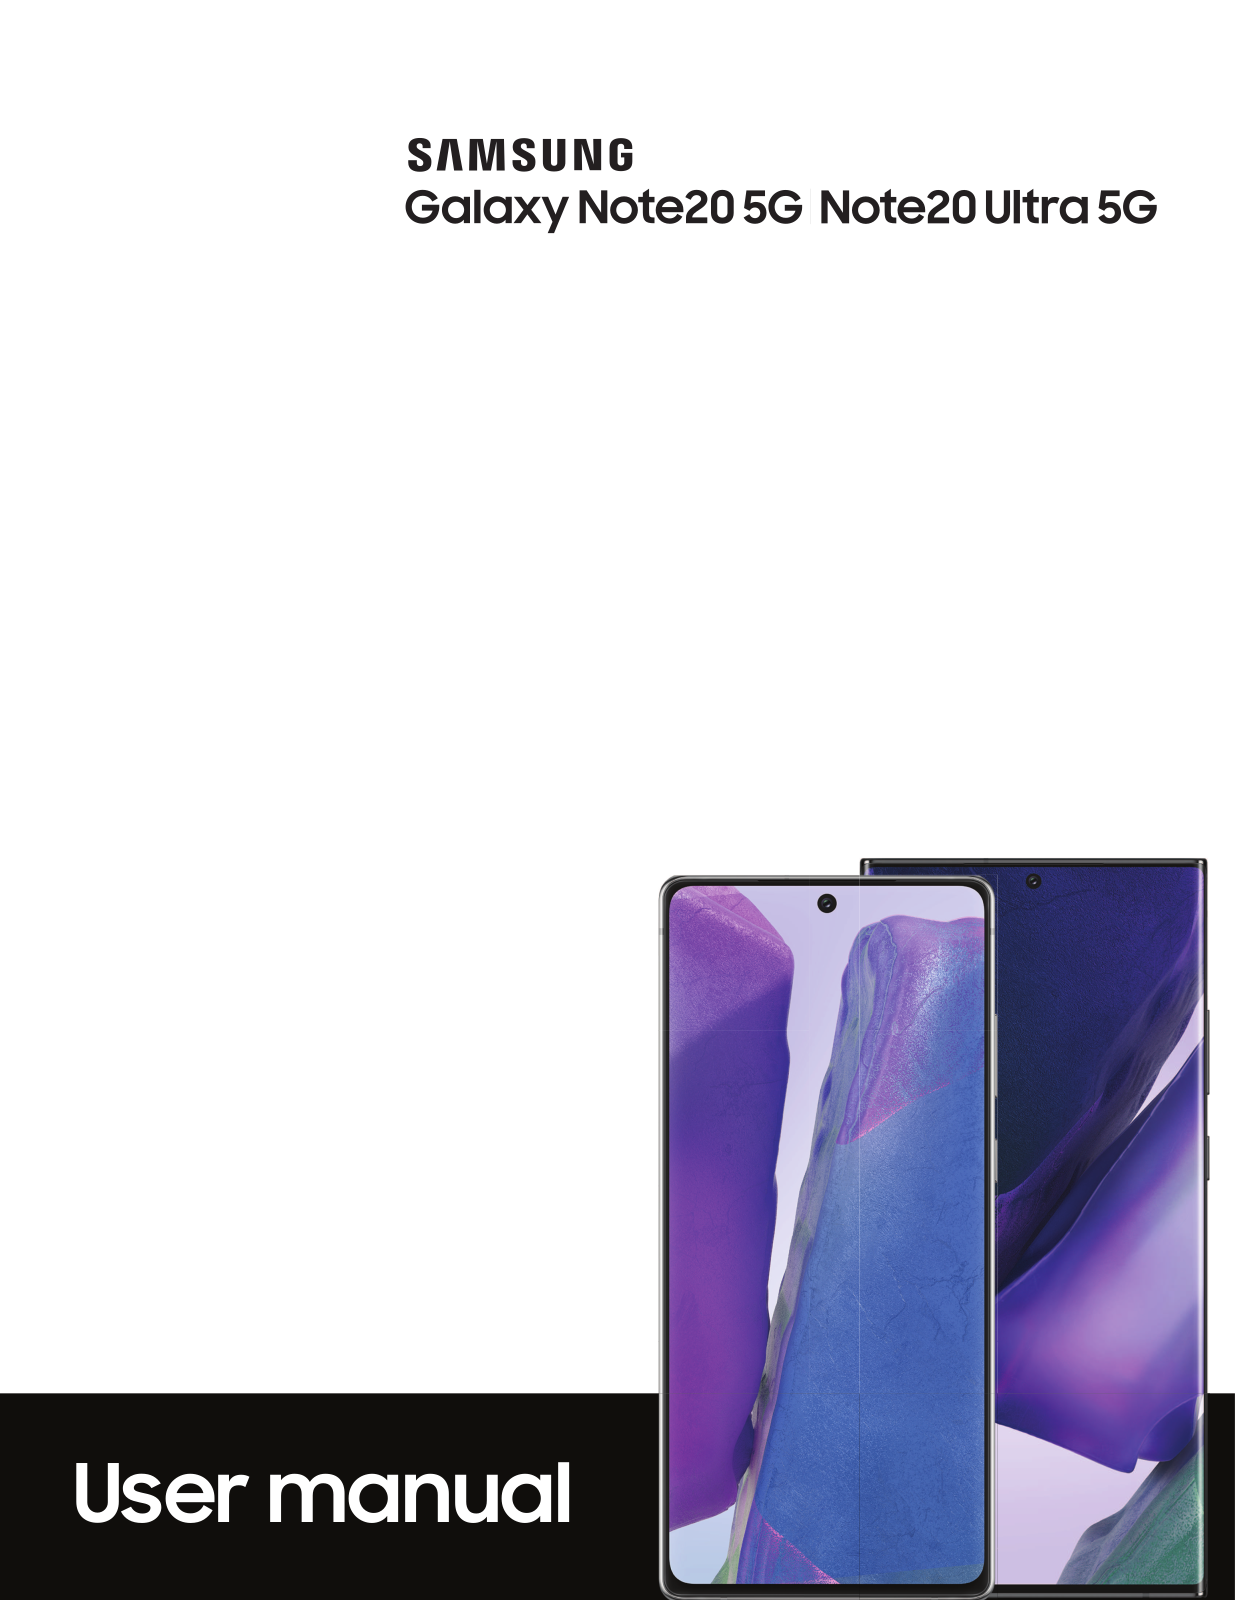 Samsung Galaxy Note20 5G, Galaxy Note20 Ultra 5G User Manual